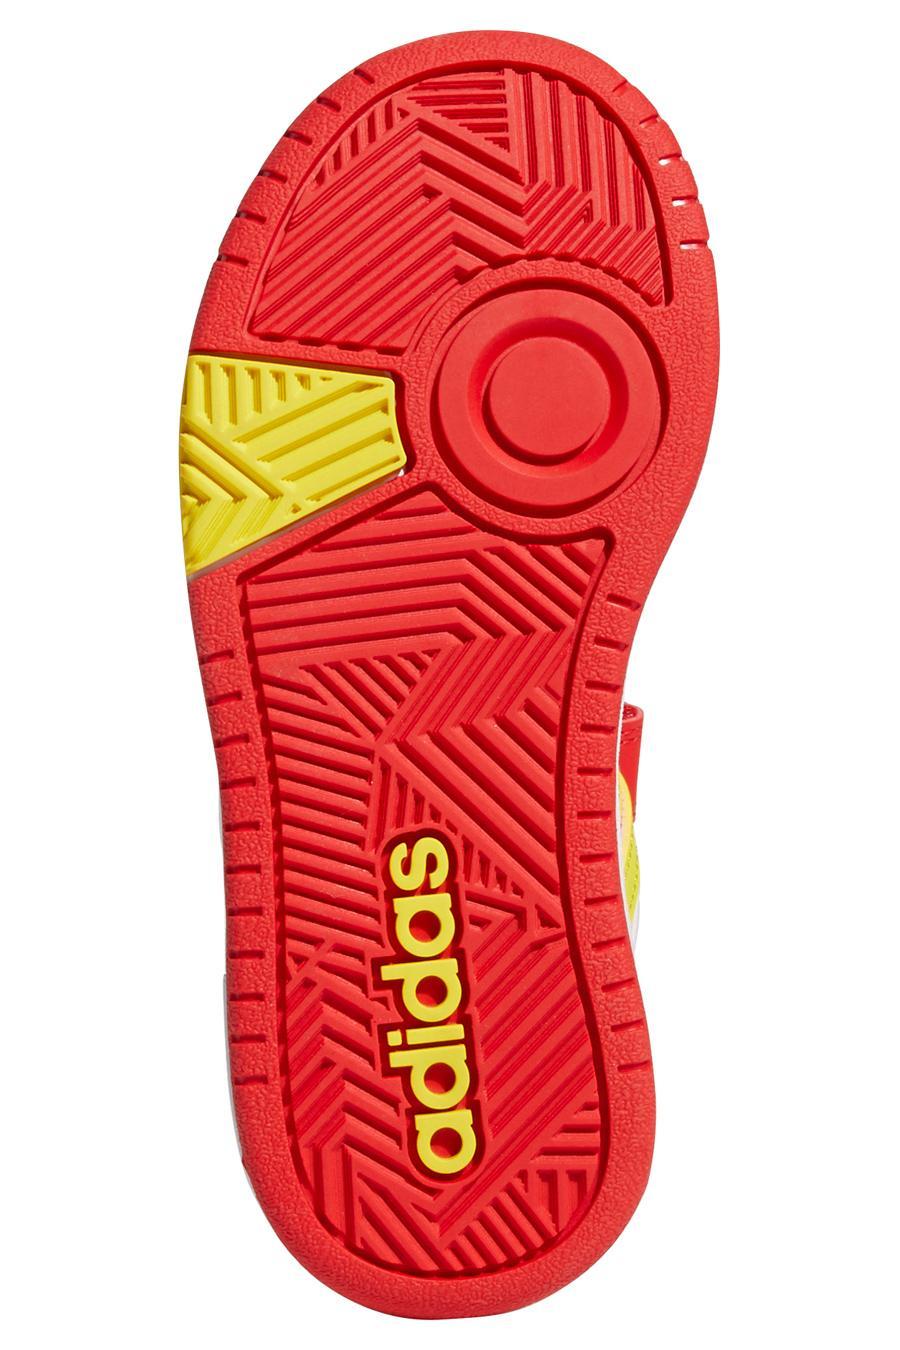 adidas sneakers adidas superhero cf c hoops 3.0 gy5536. da bambino, colore rosso